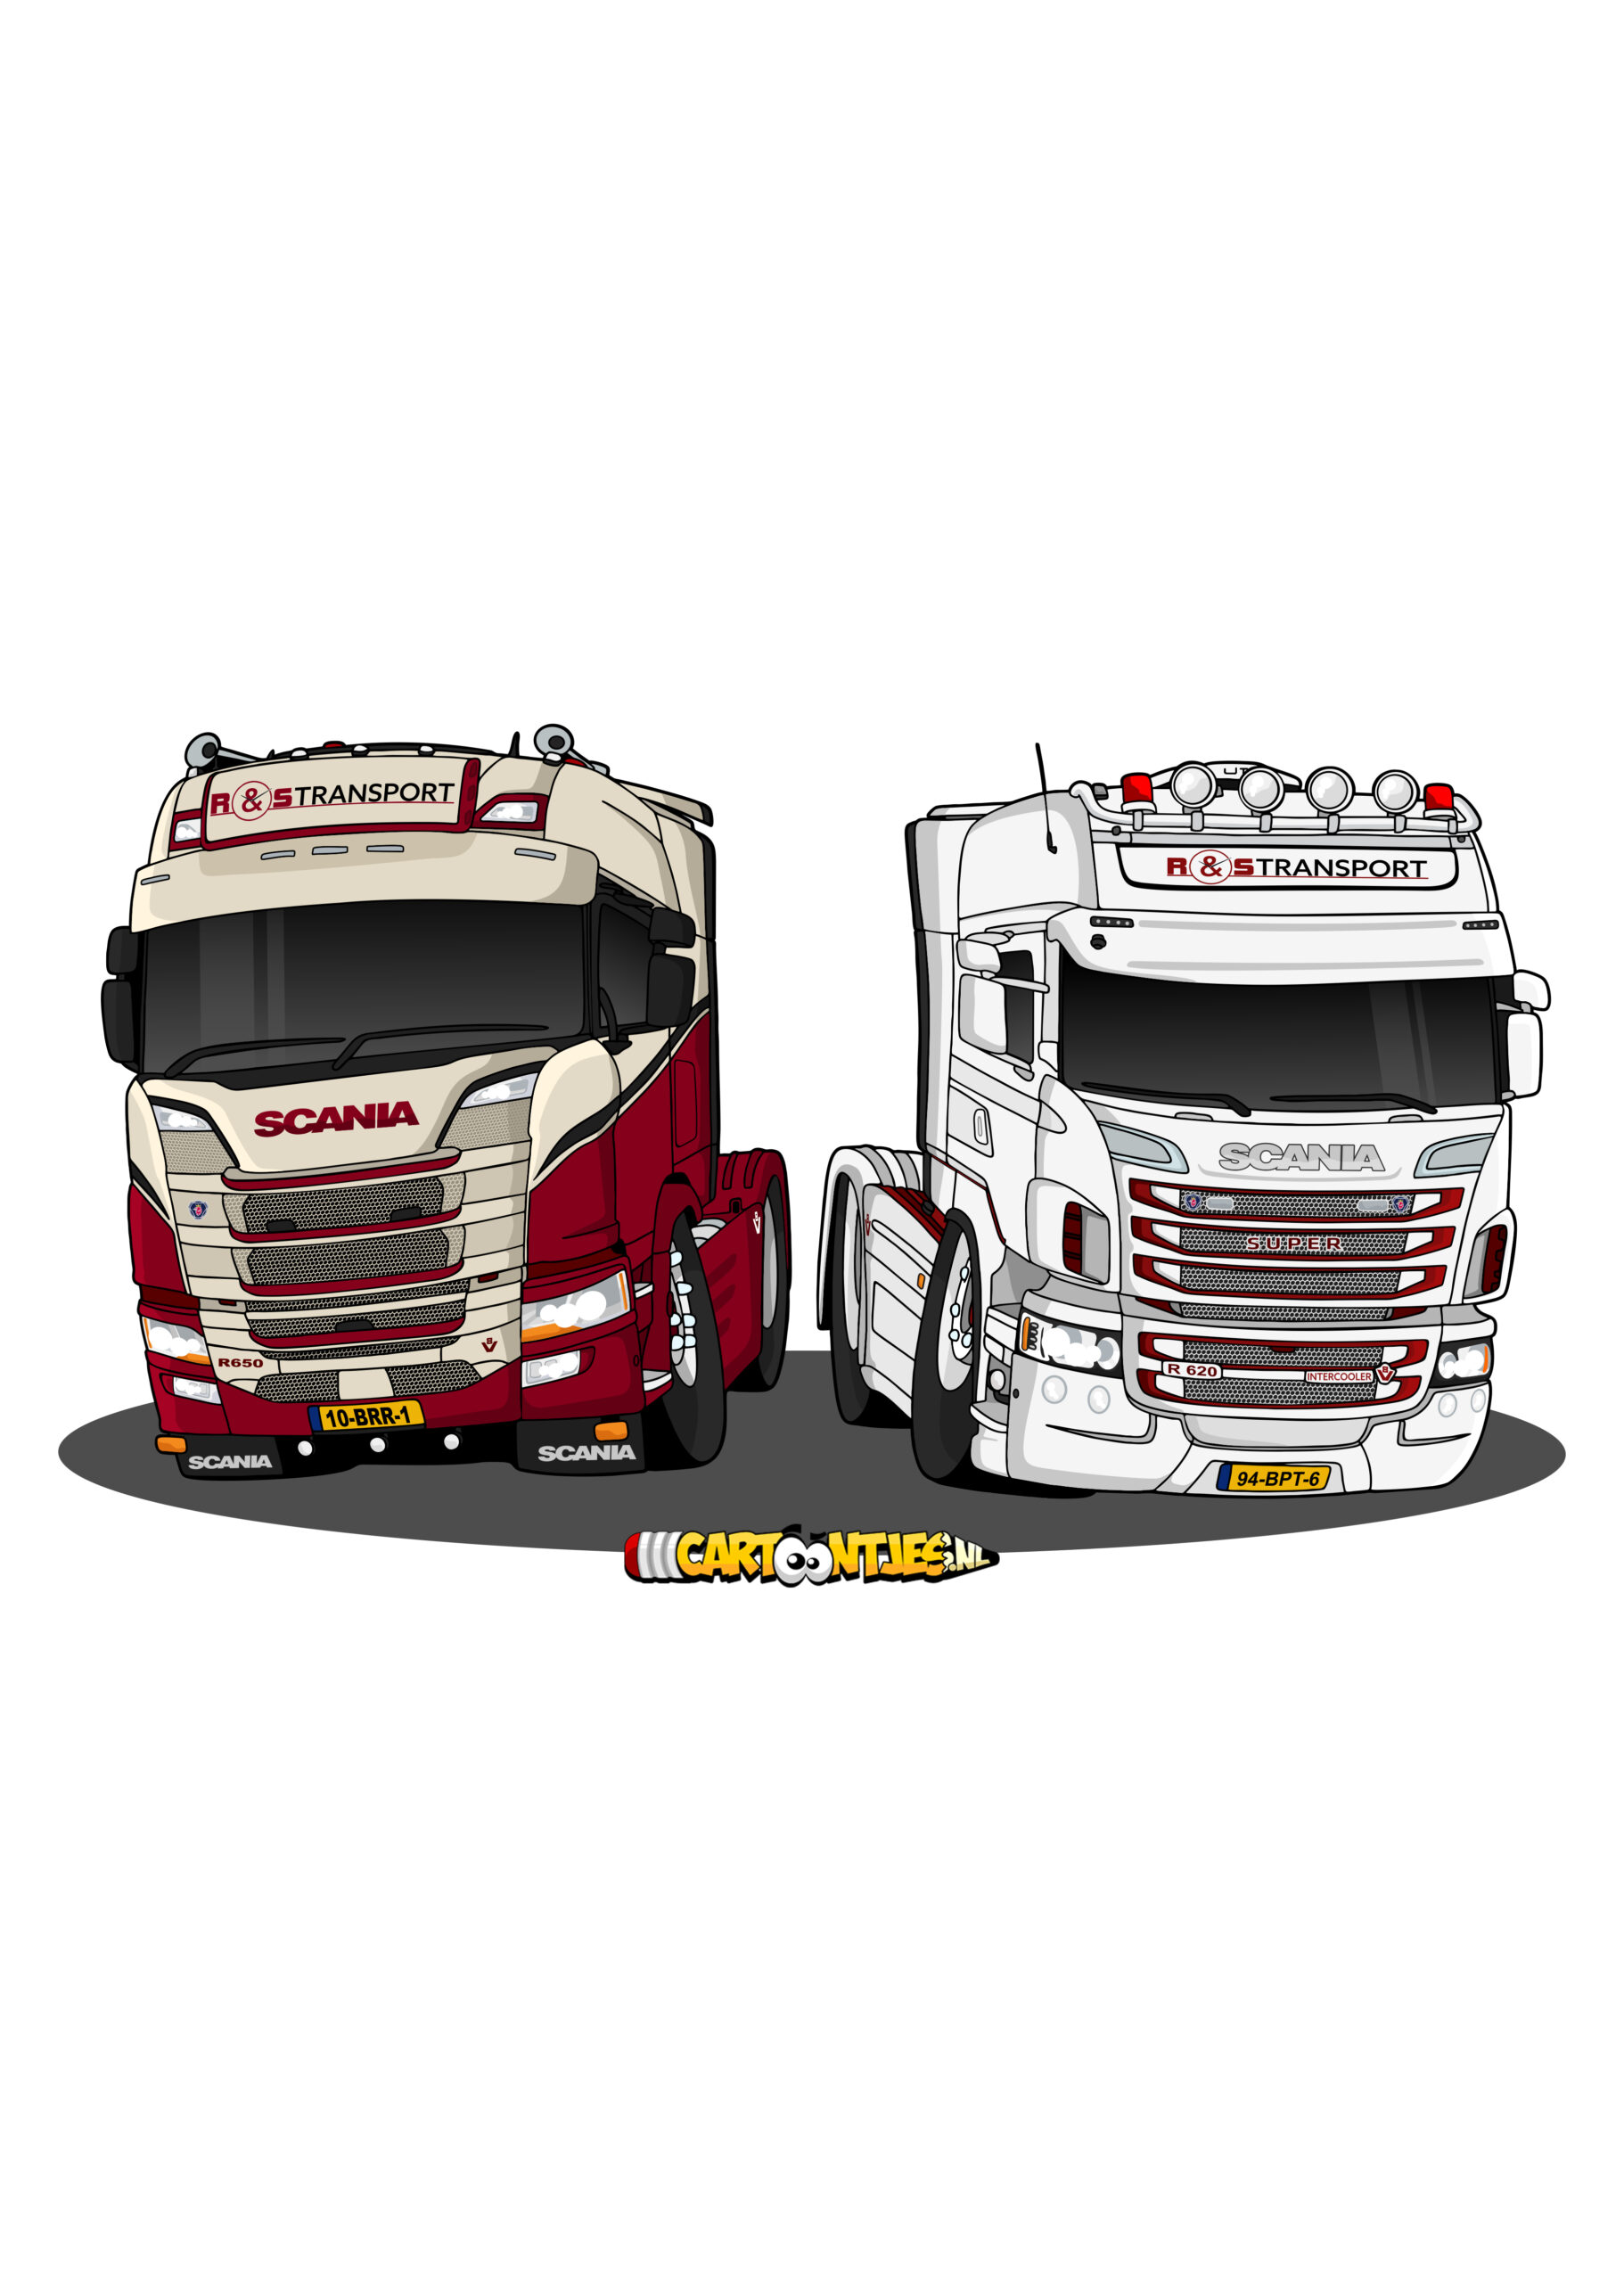 truck-cartoon-r&s-transport